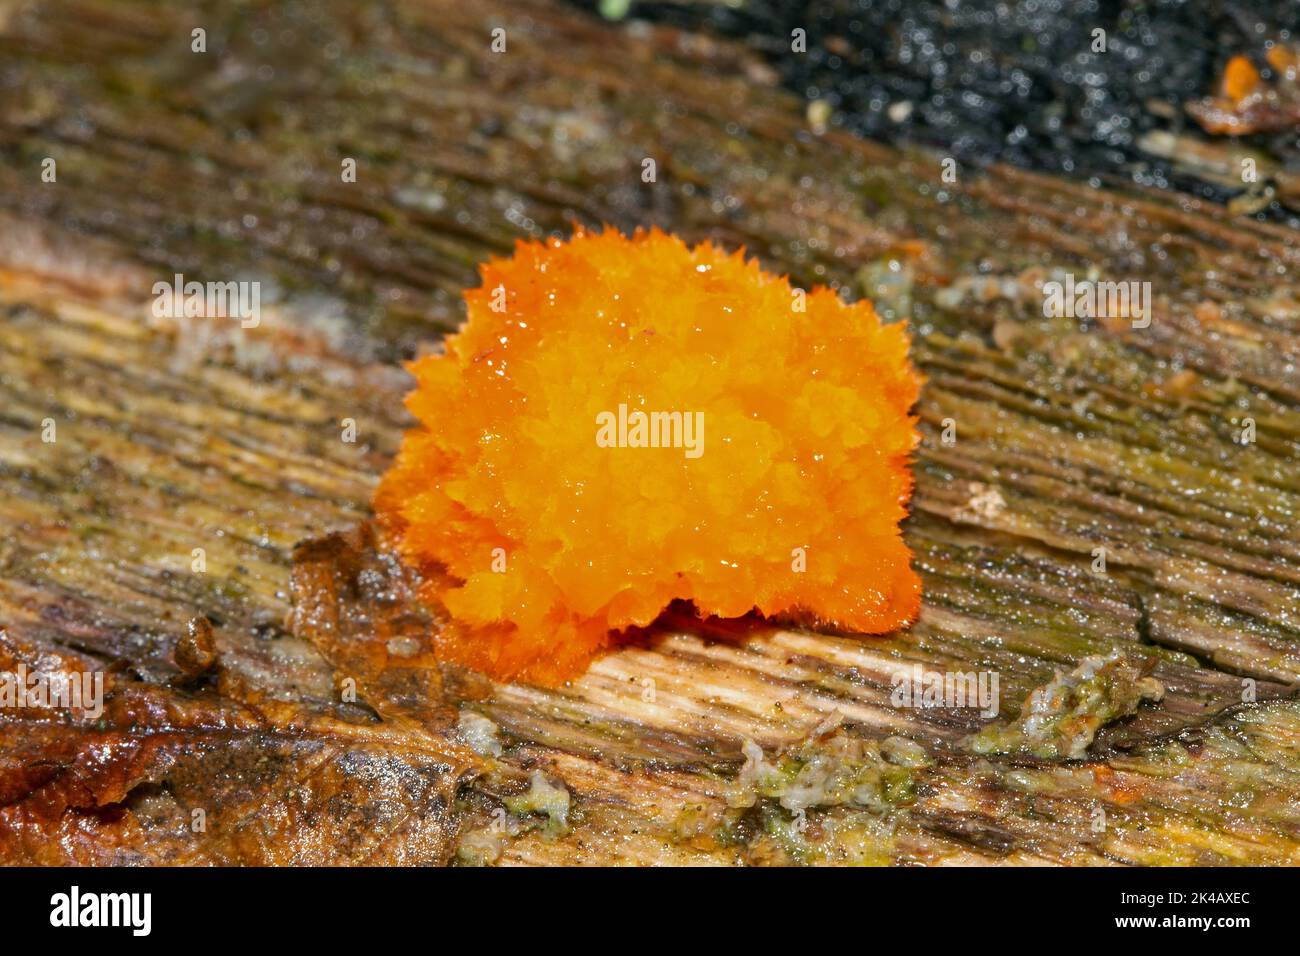 Fish egg slime fungus orange fish egg-like fruiting body on tree trunk Stock Photo